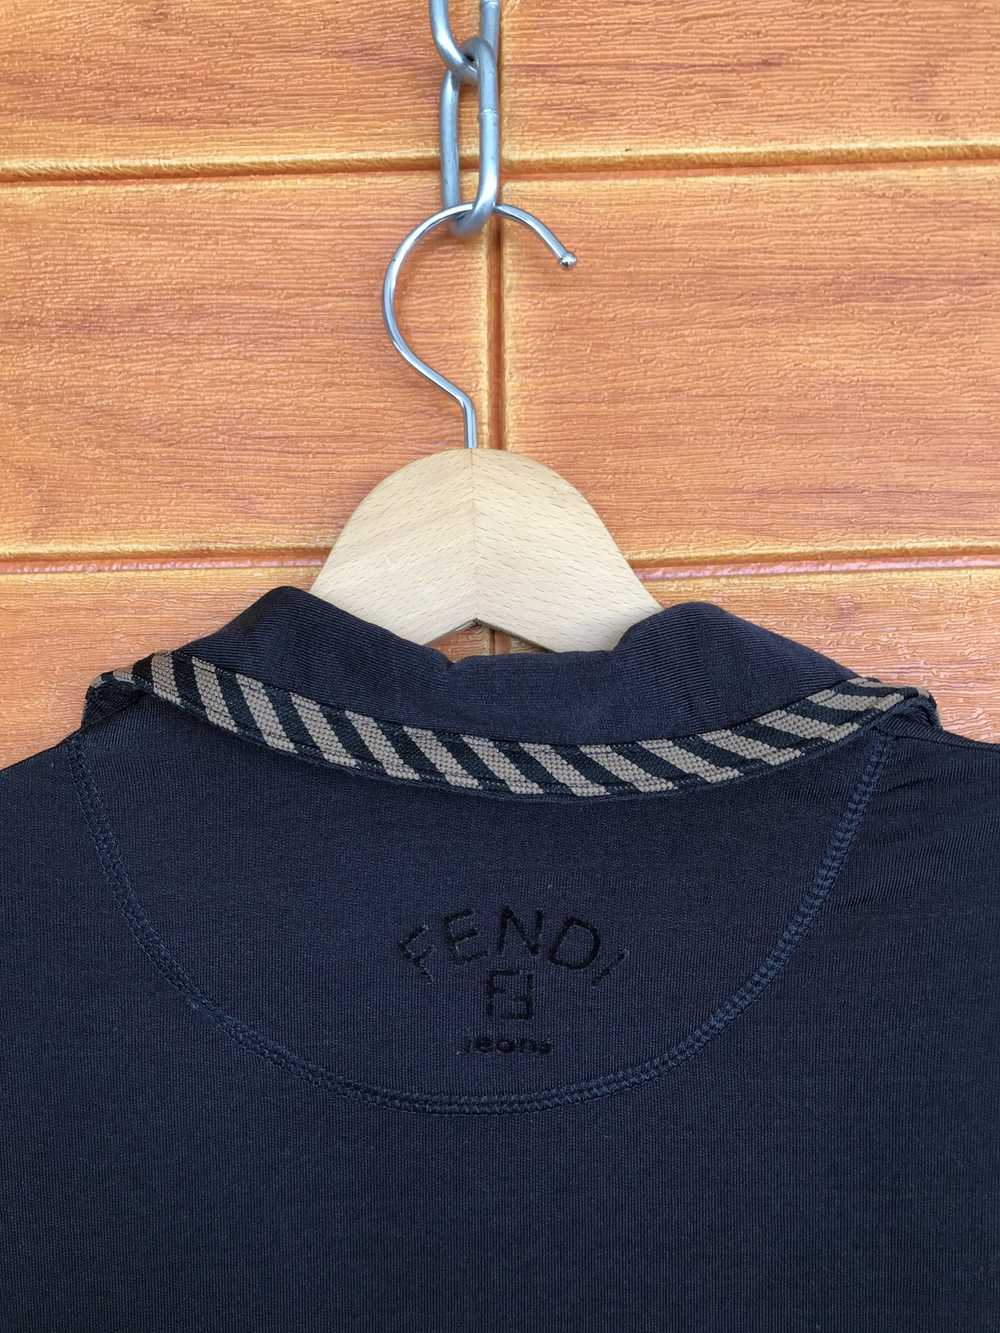 Fendi Fendi Made In Italy Longsleeve T-Shirt - image 8